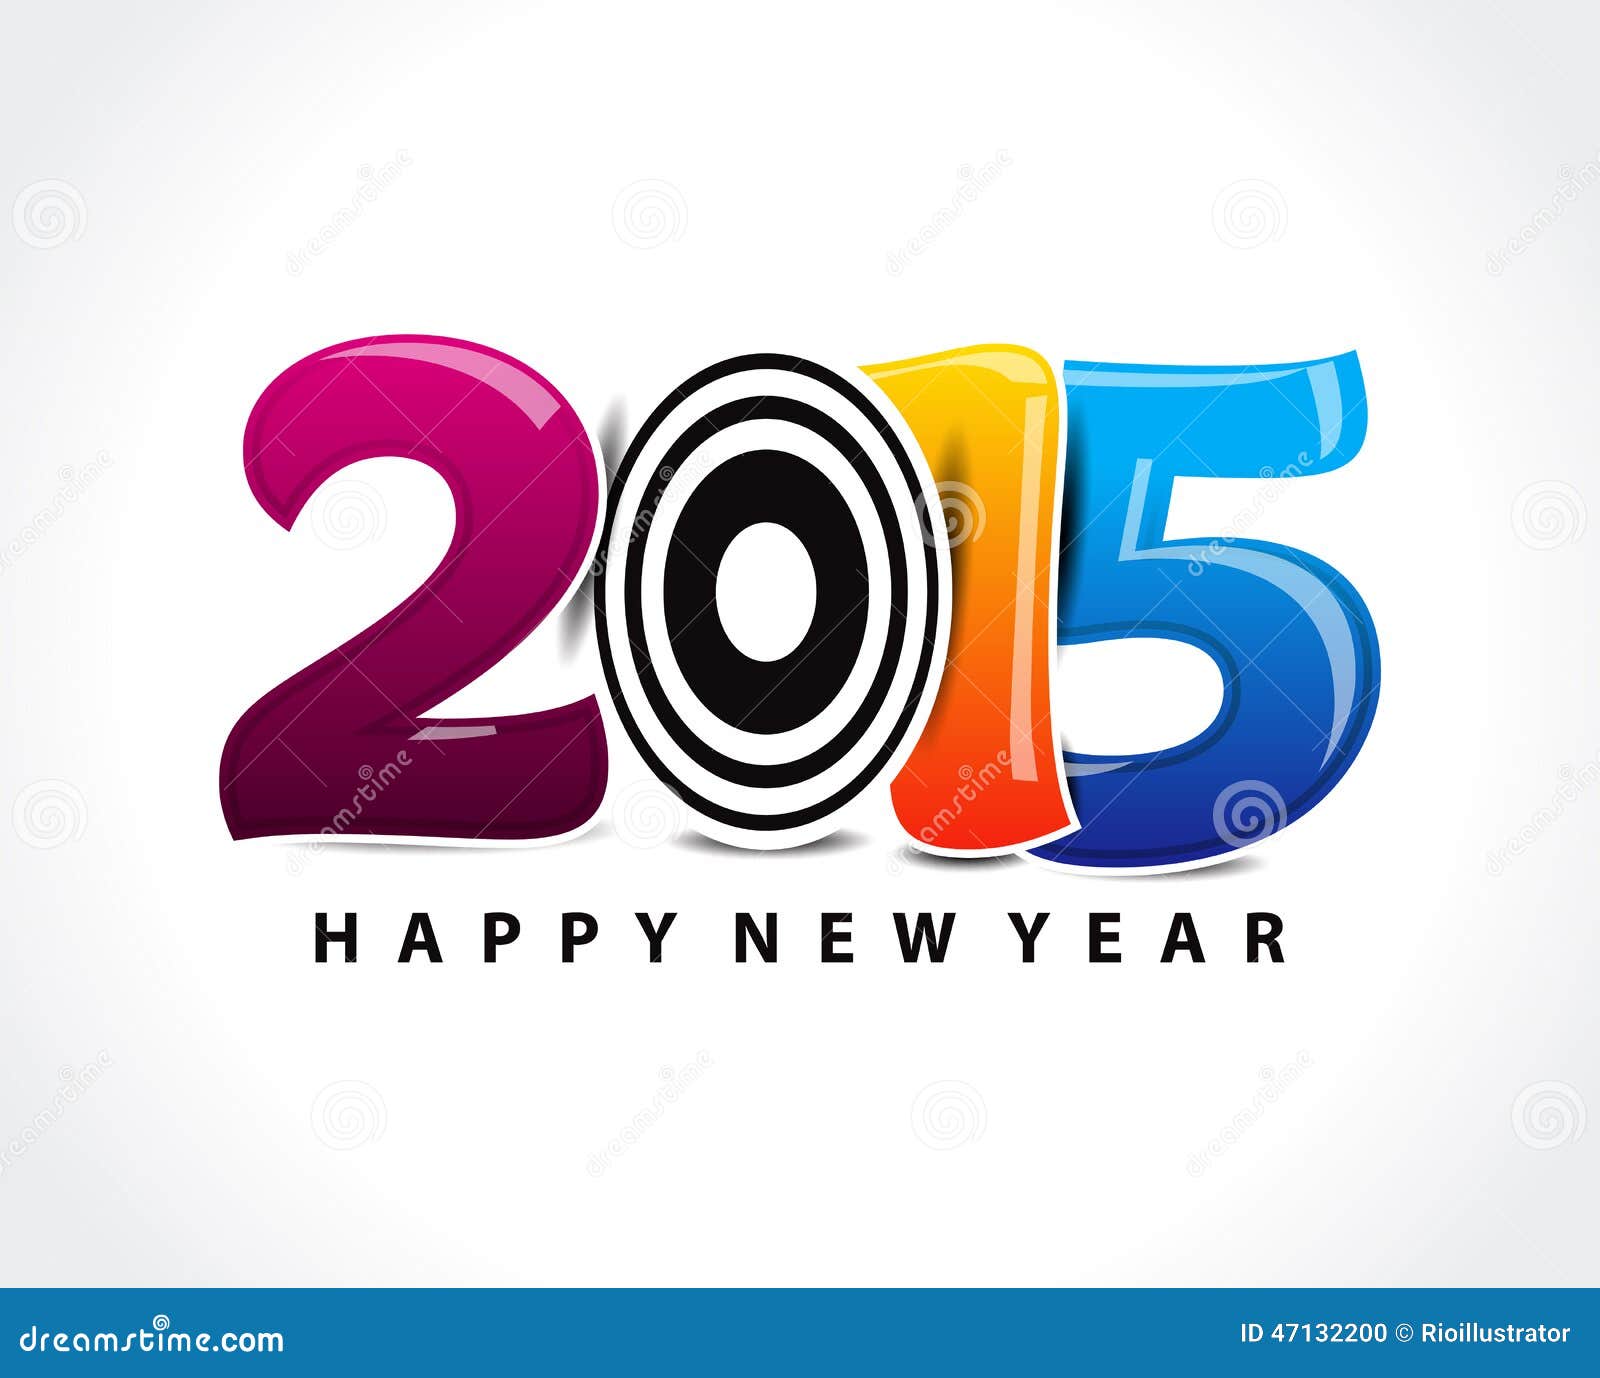 happy new year text clipart - photo #20